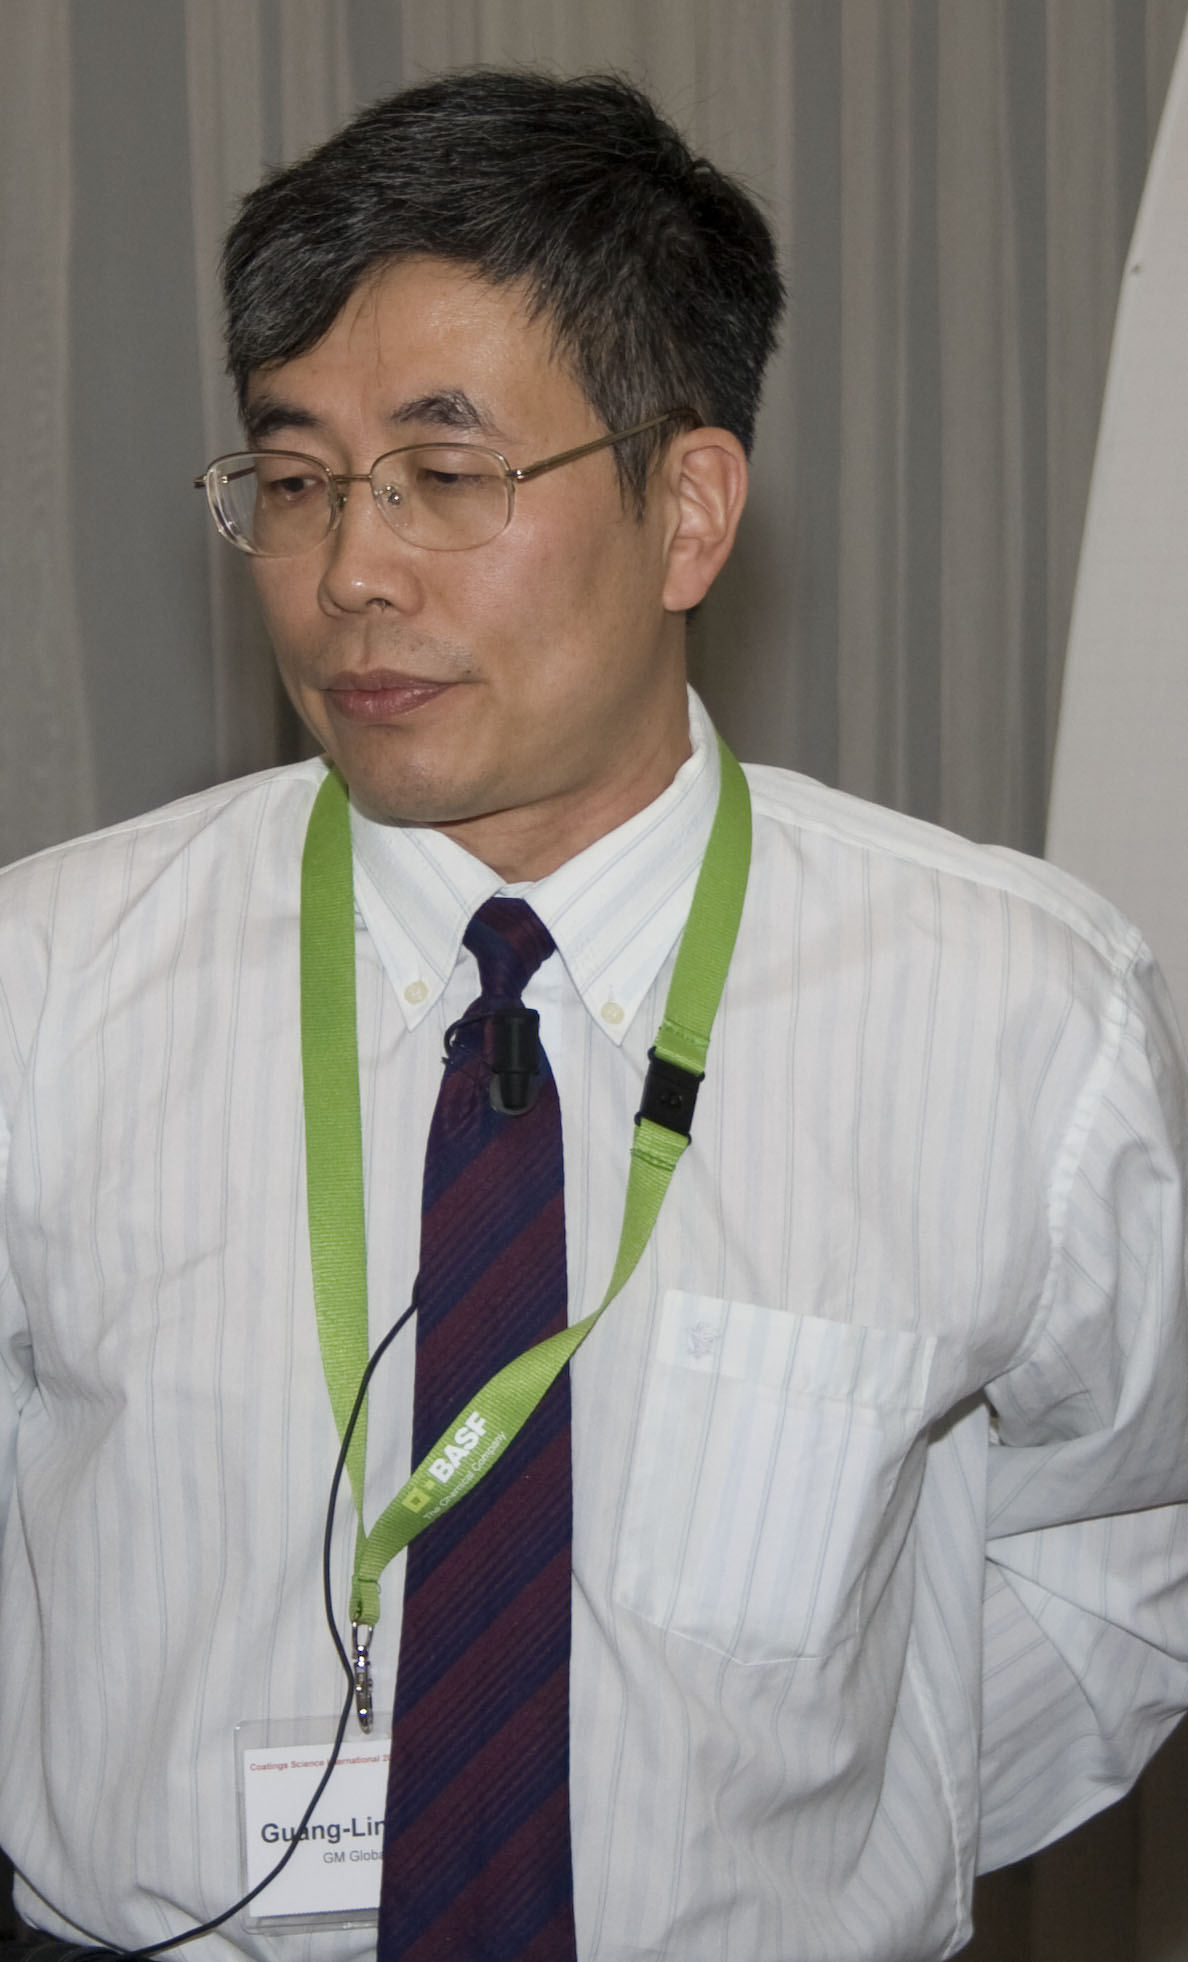 Dr Guang-Ling Song